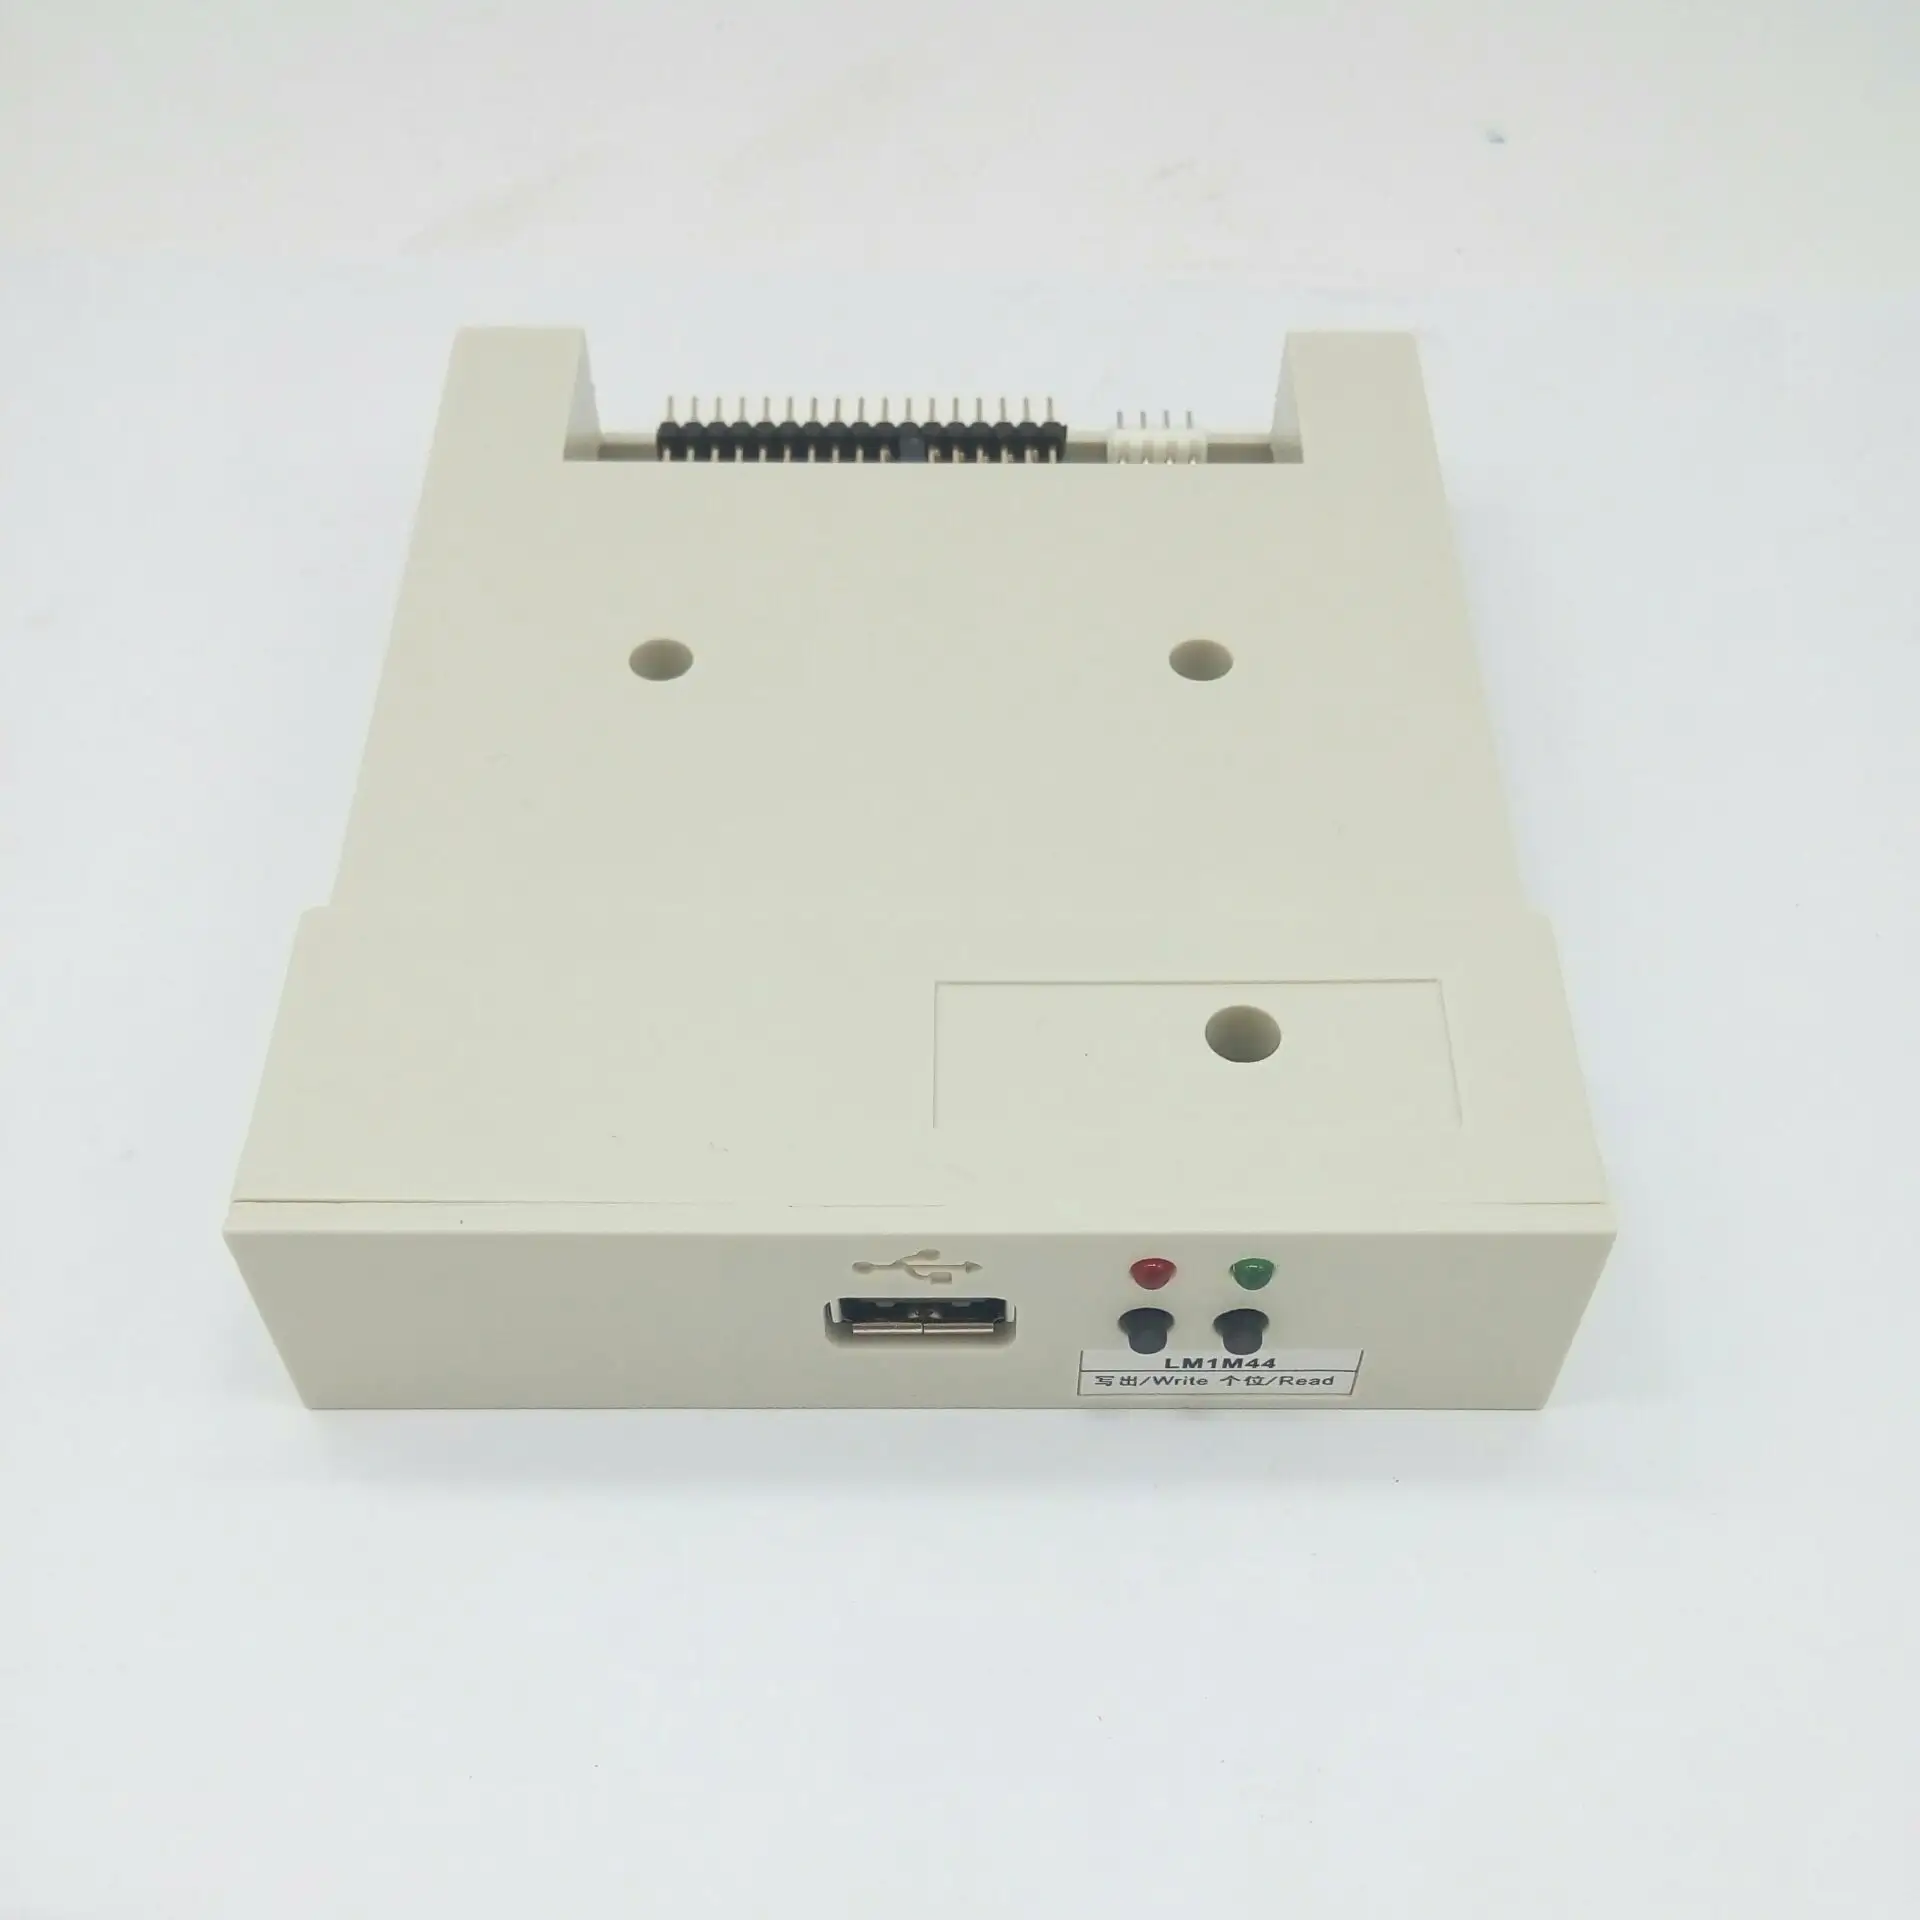 floppy to usb drive external 3.5 floppy disk drive SFR1M44-SUE USB simulating floppy drive Embroidery machine